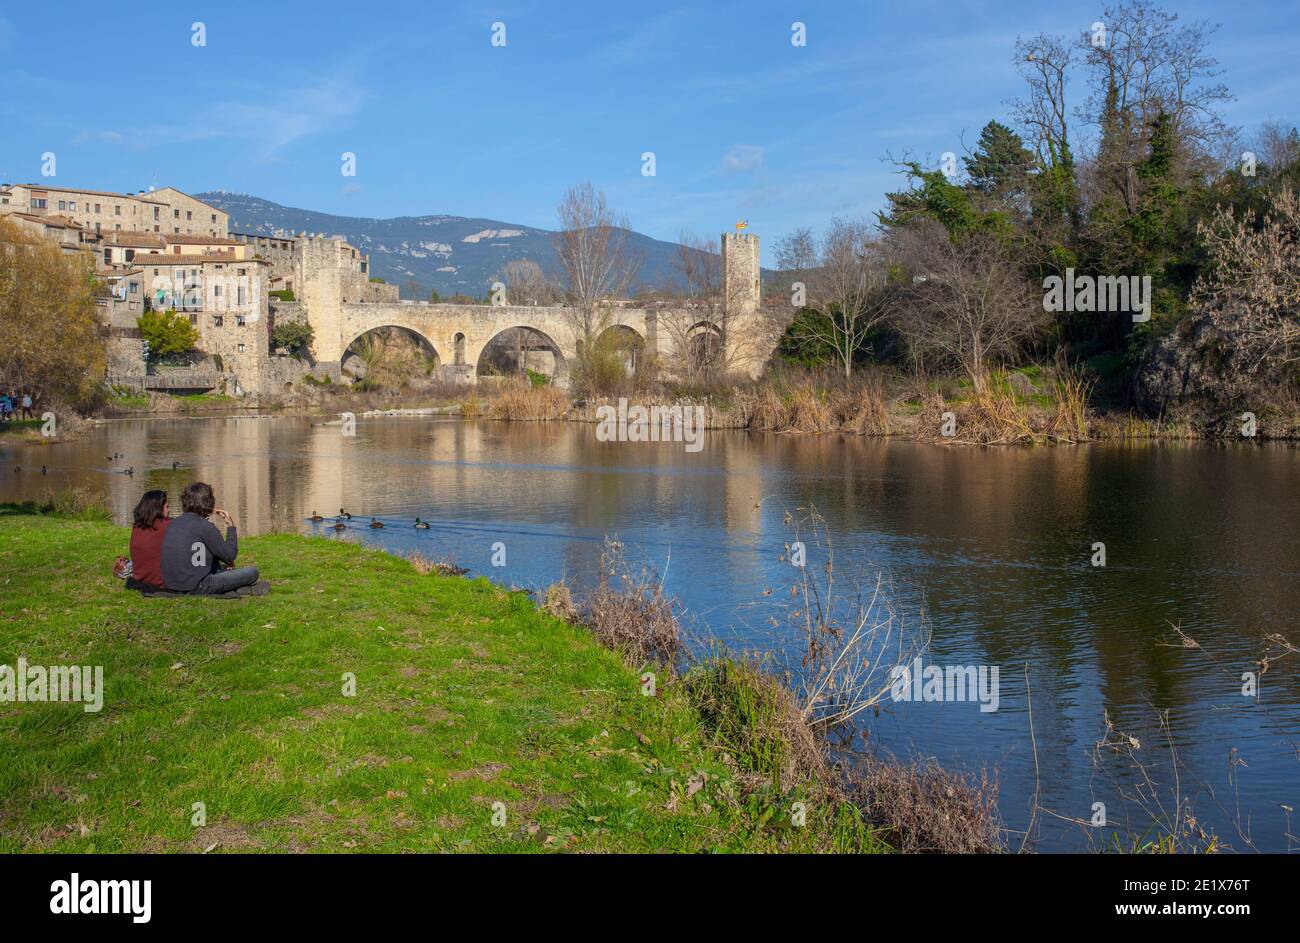 Besalu, Spagna - 28 dicembre 2019: Fiume Fluvia con ponte medievale in fondo, Besalu. Garottxa, Girona, Catalogna, Spagna Foto Stock